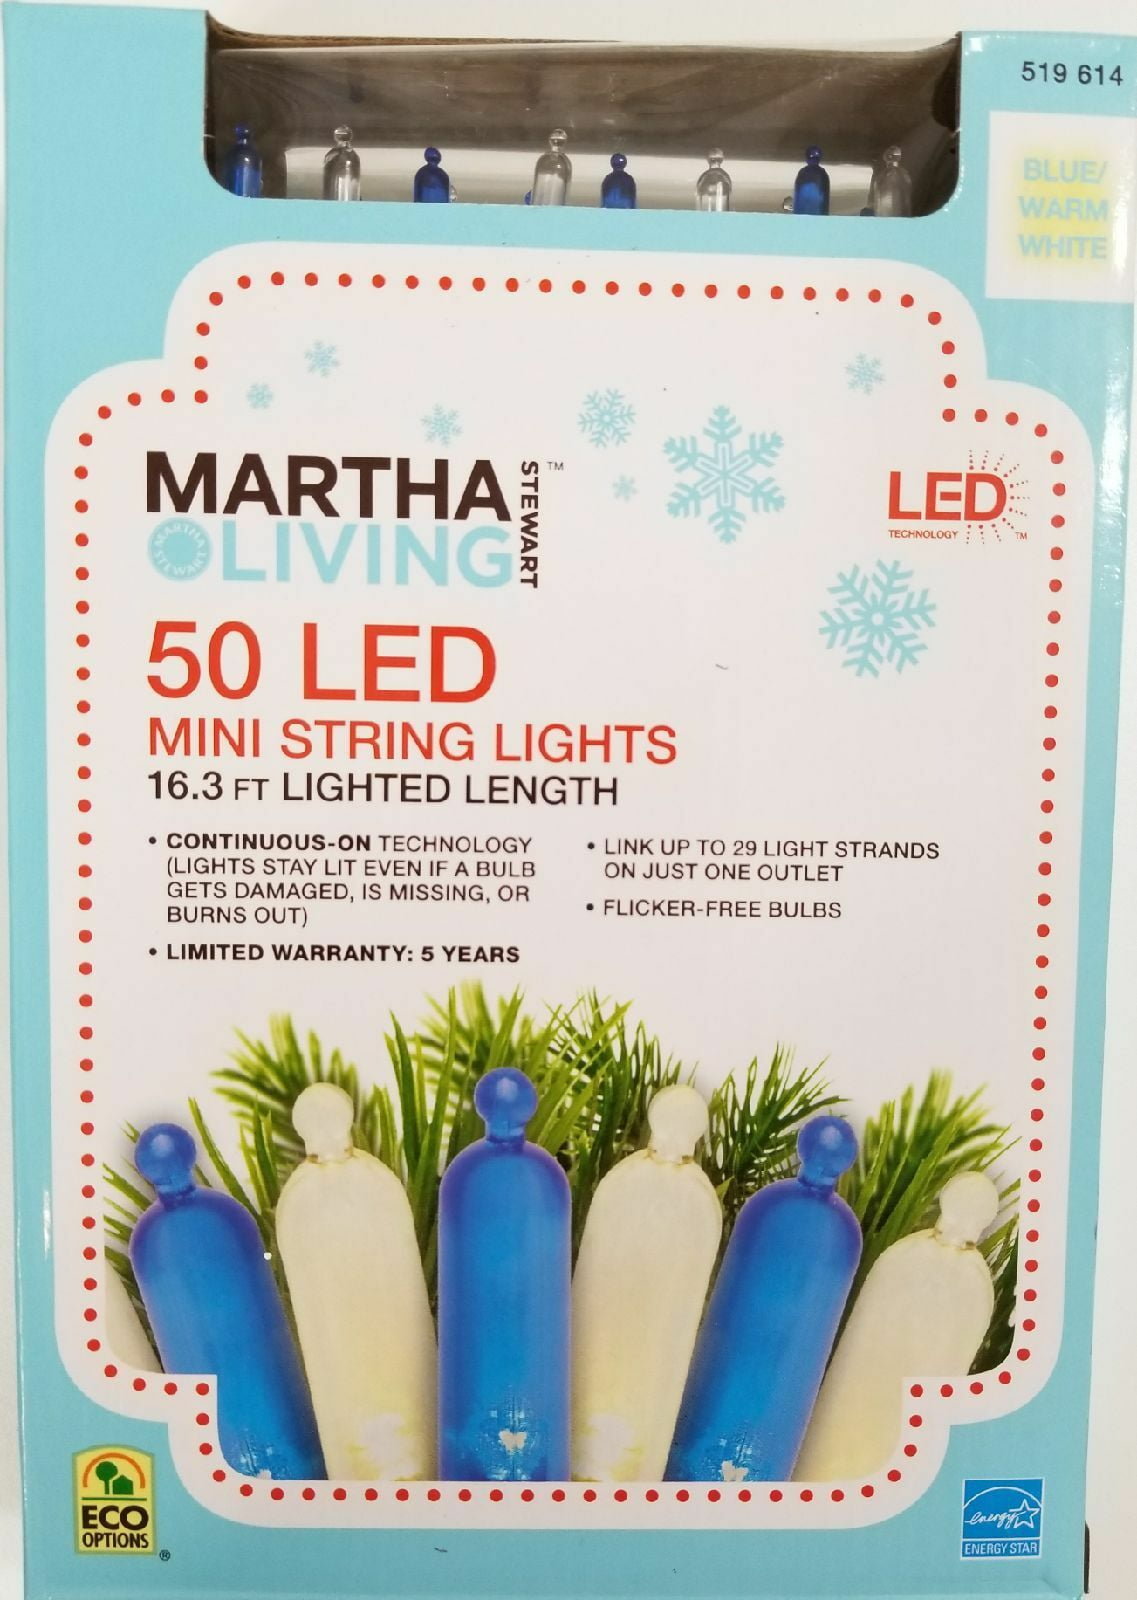 NEW 50 LED Light blue Warm White Blue String Lights by Martha Stewart Living 